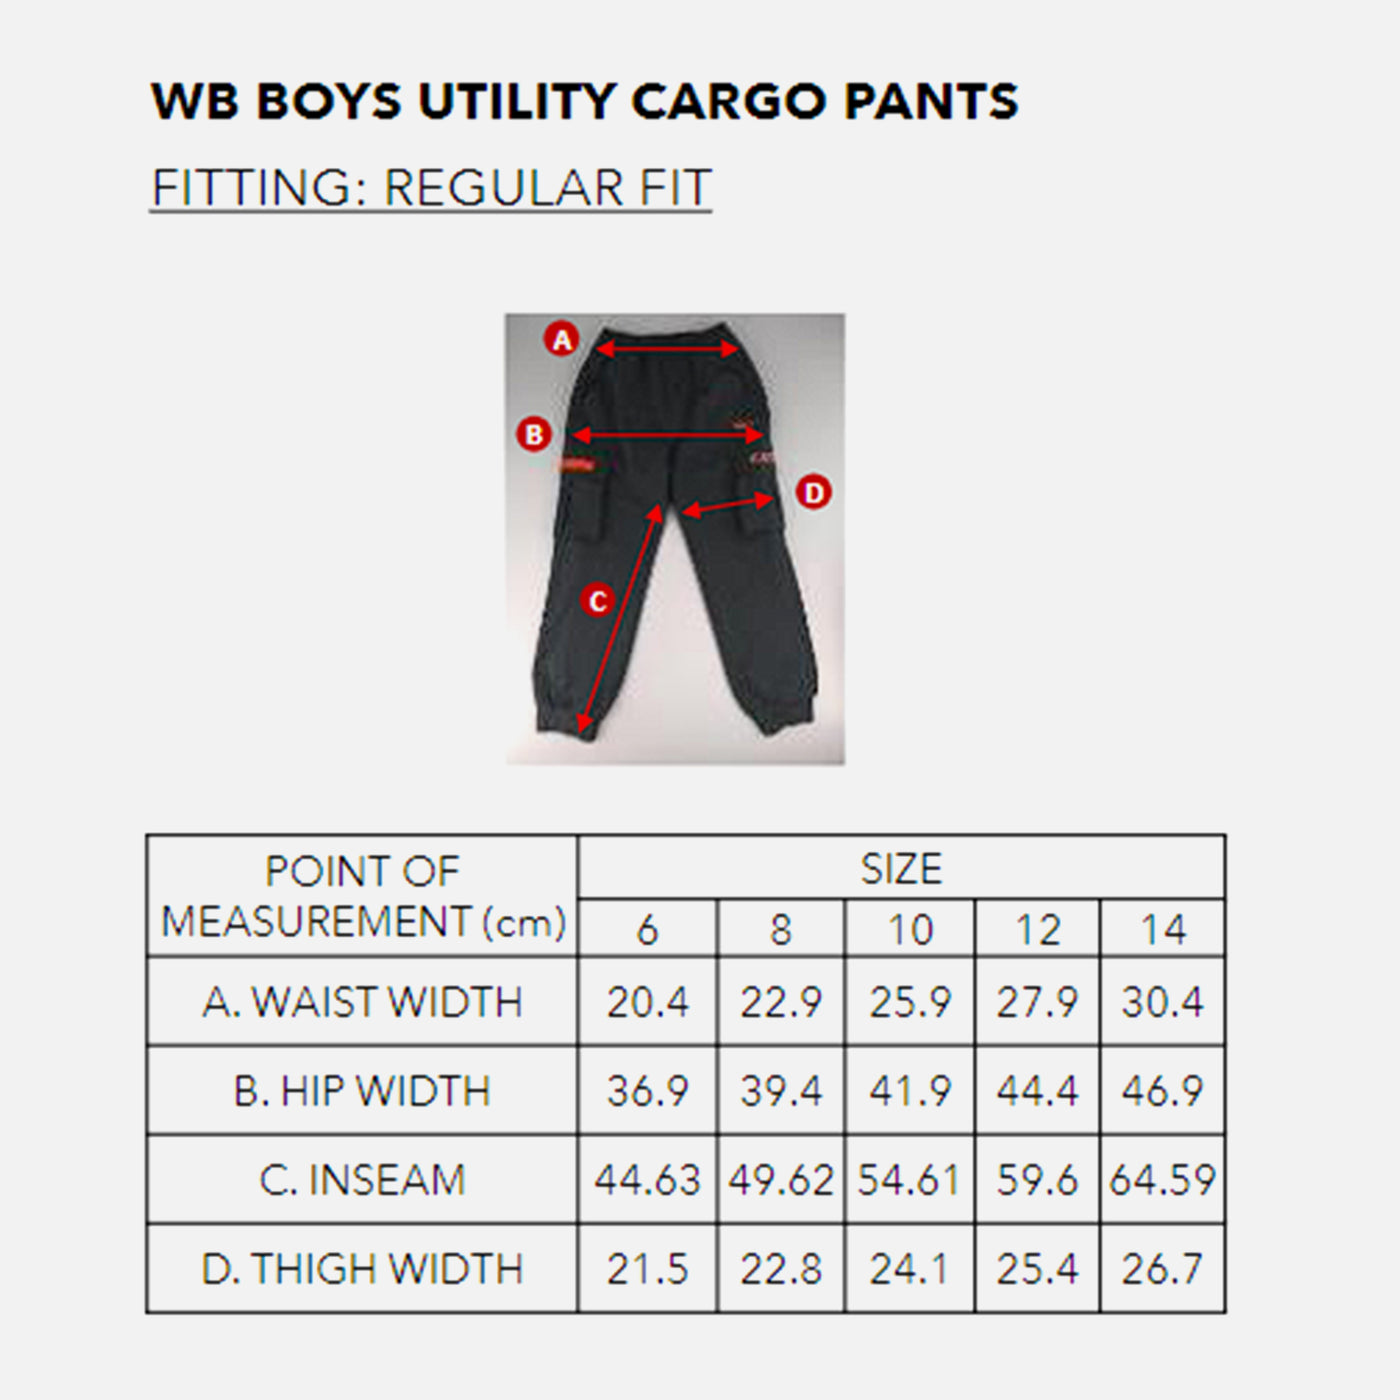 WB BOYS UTILITY CARGO PANTS